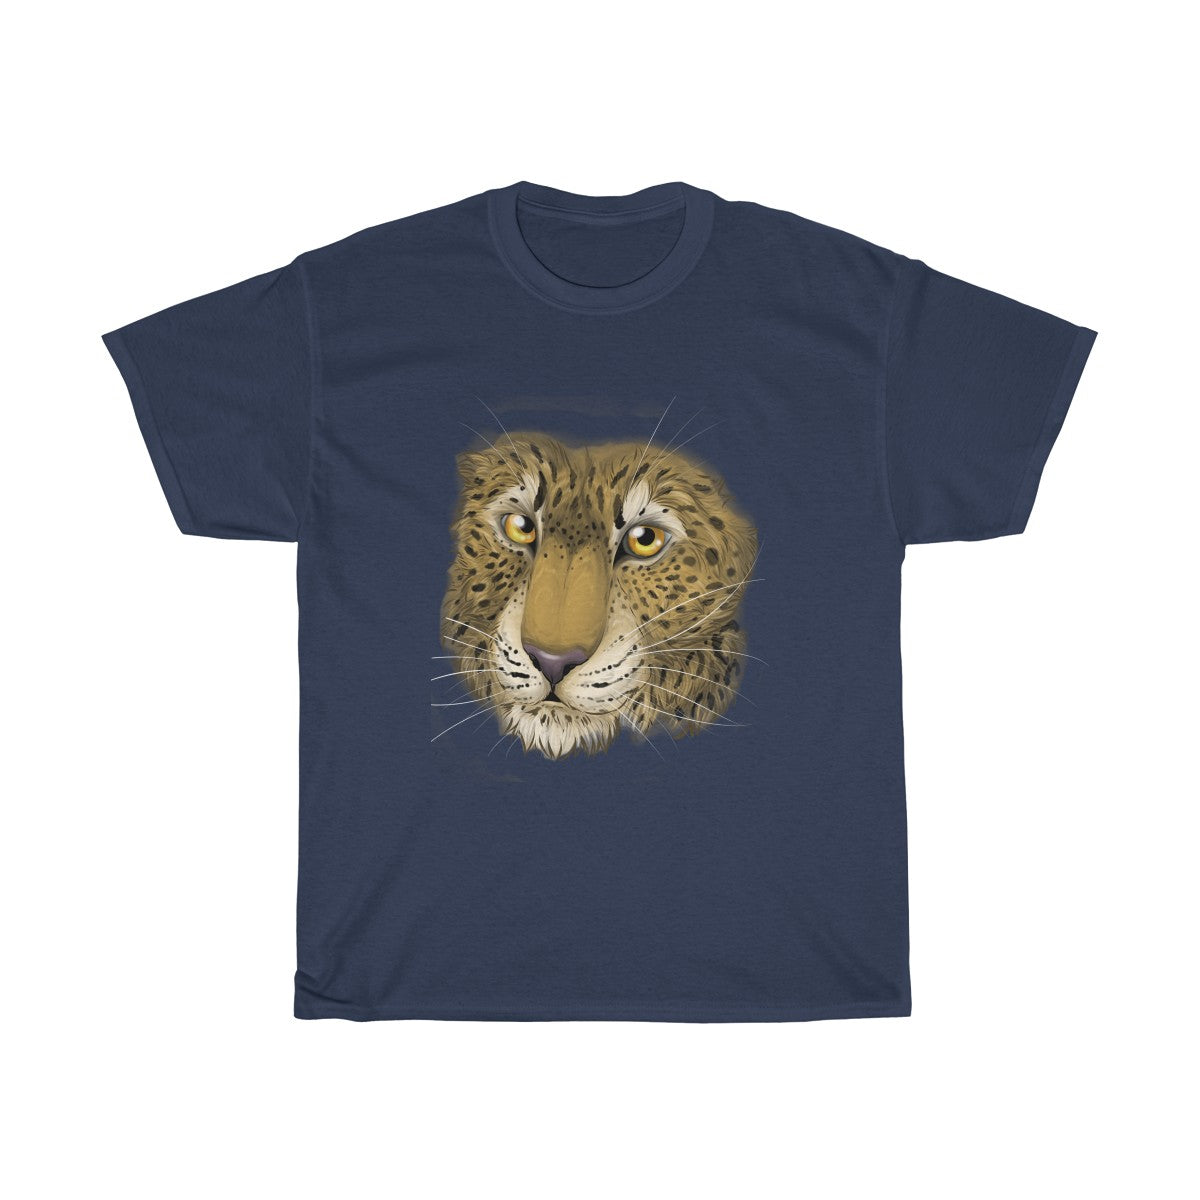 Leopard - T-Shirt T-Shirt Dire Creatures Navy Blue S 